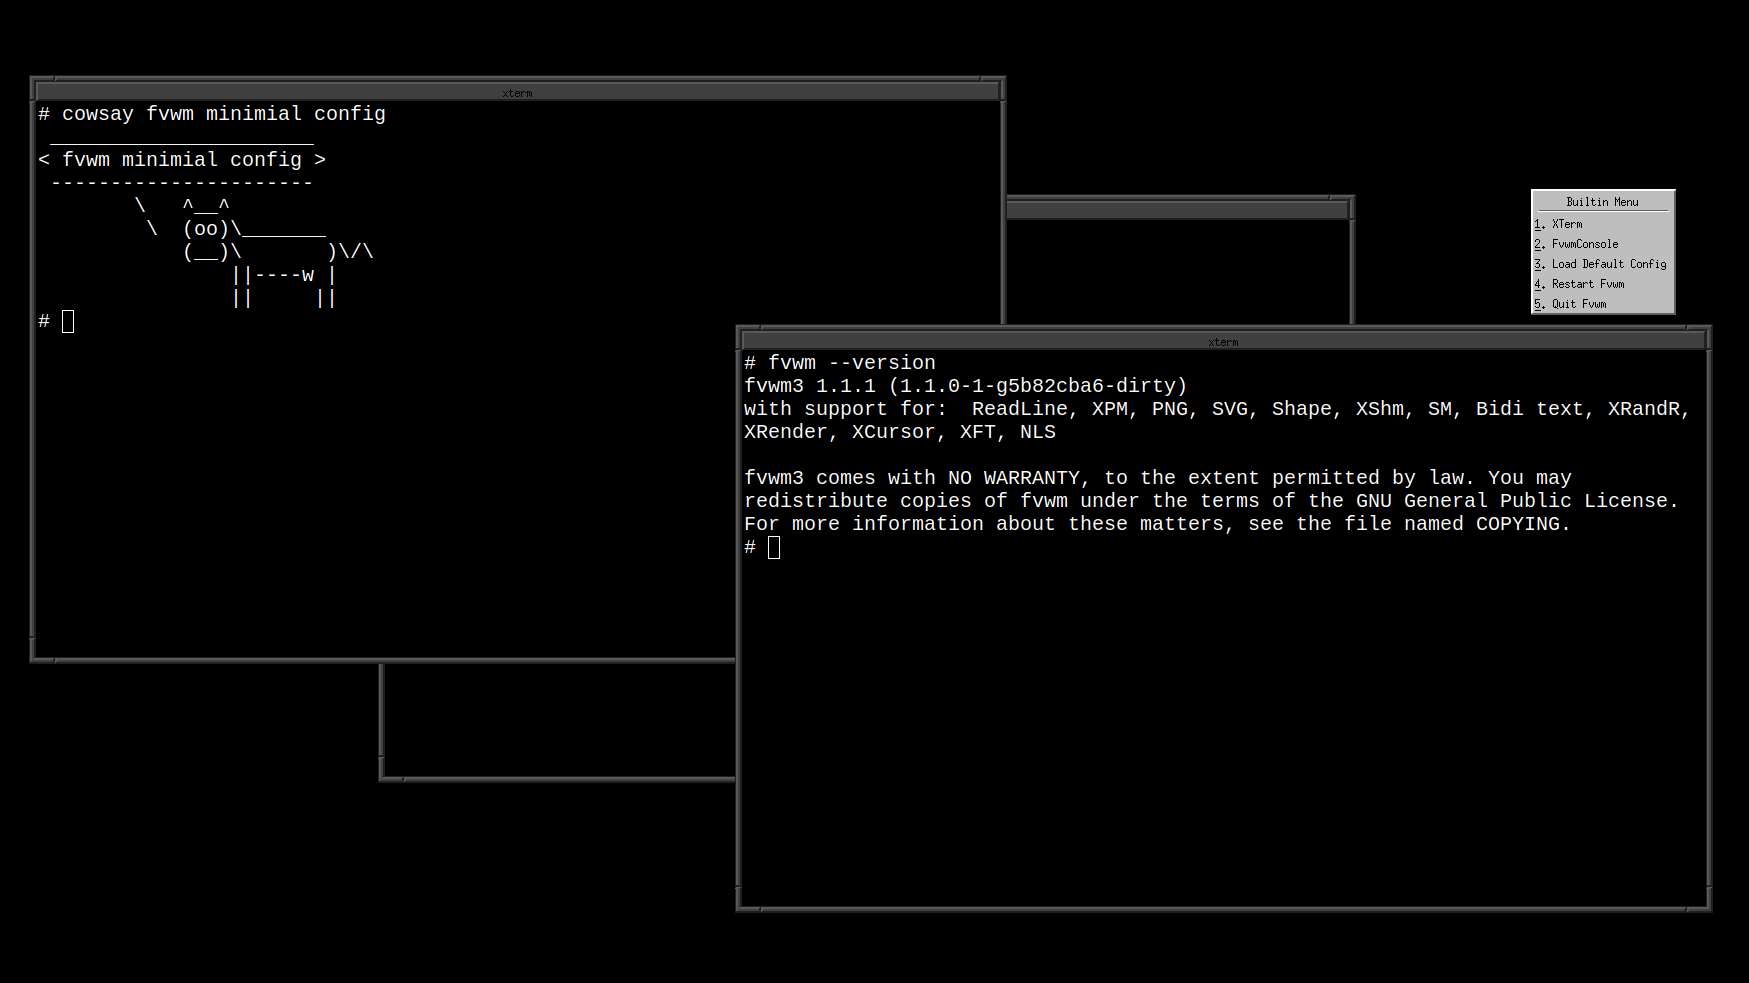 Screen shot of fvwm running a blank config.